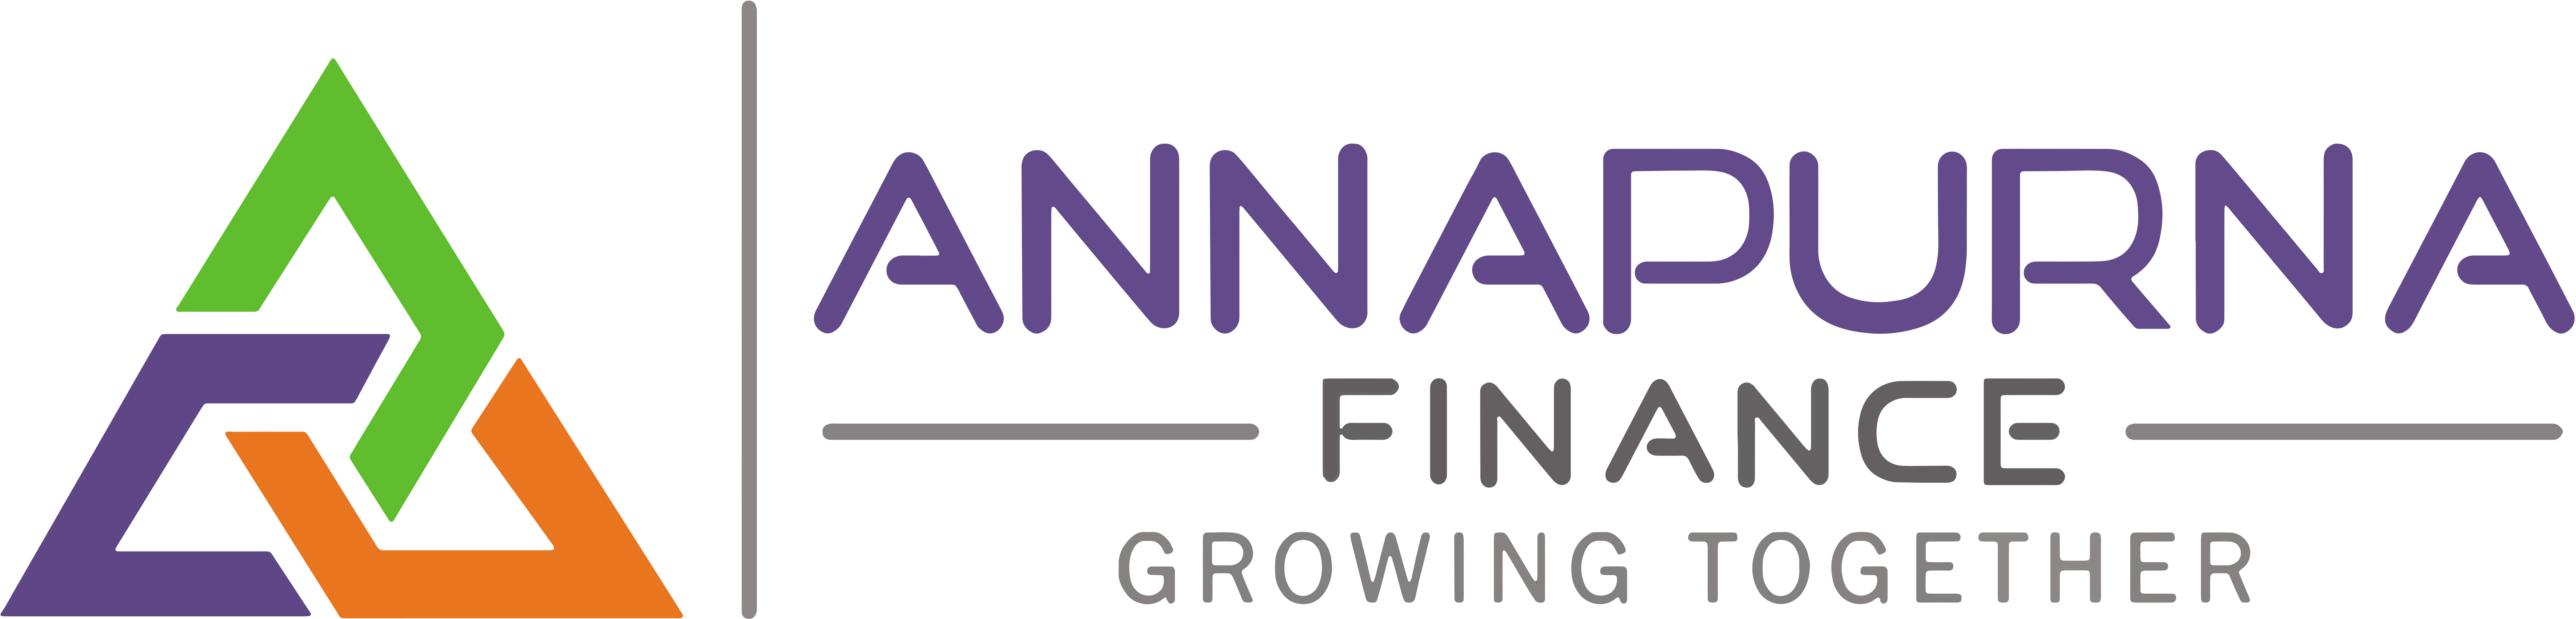 Annapurna Finance Private Limited logo